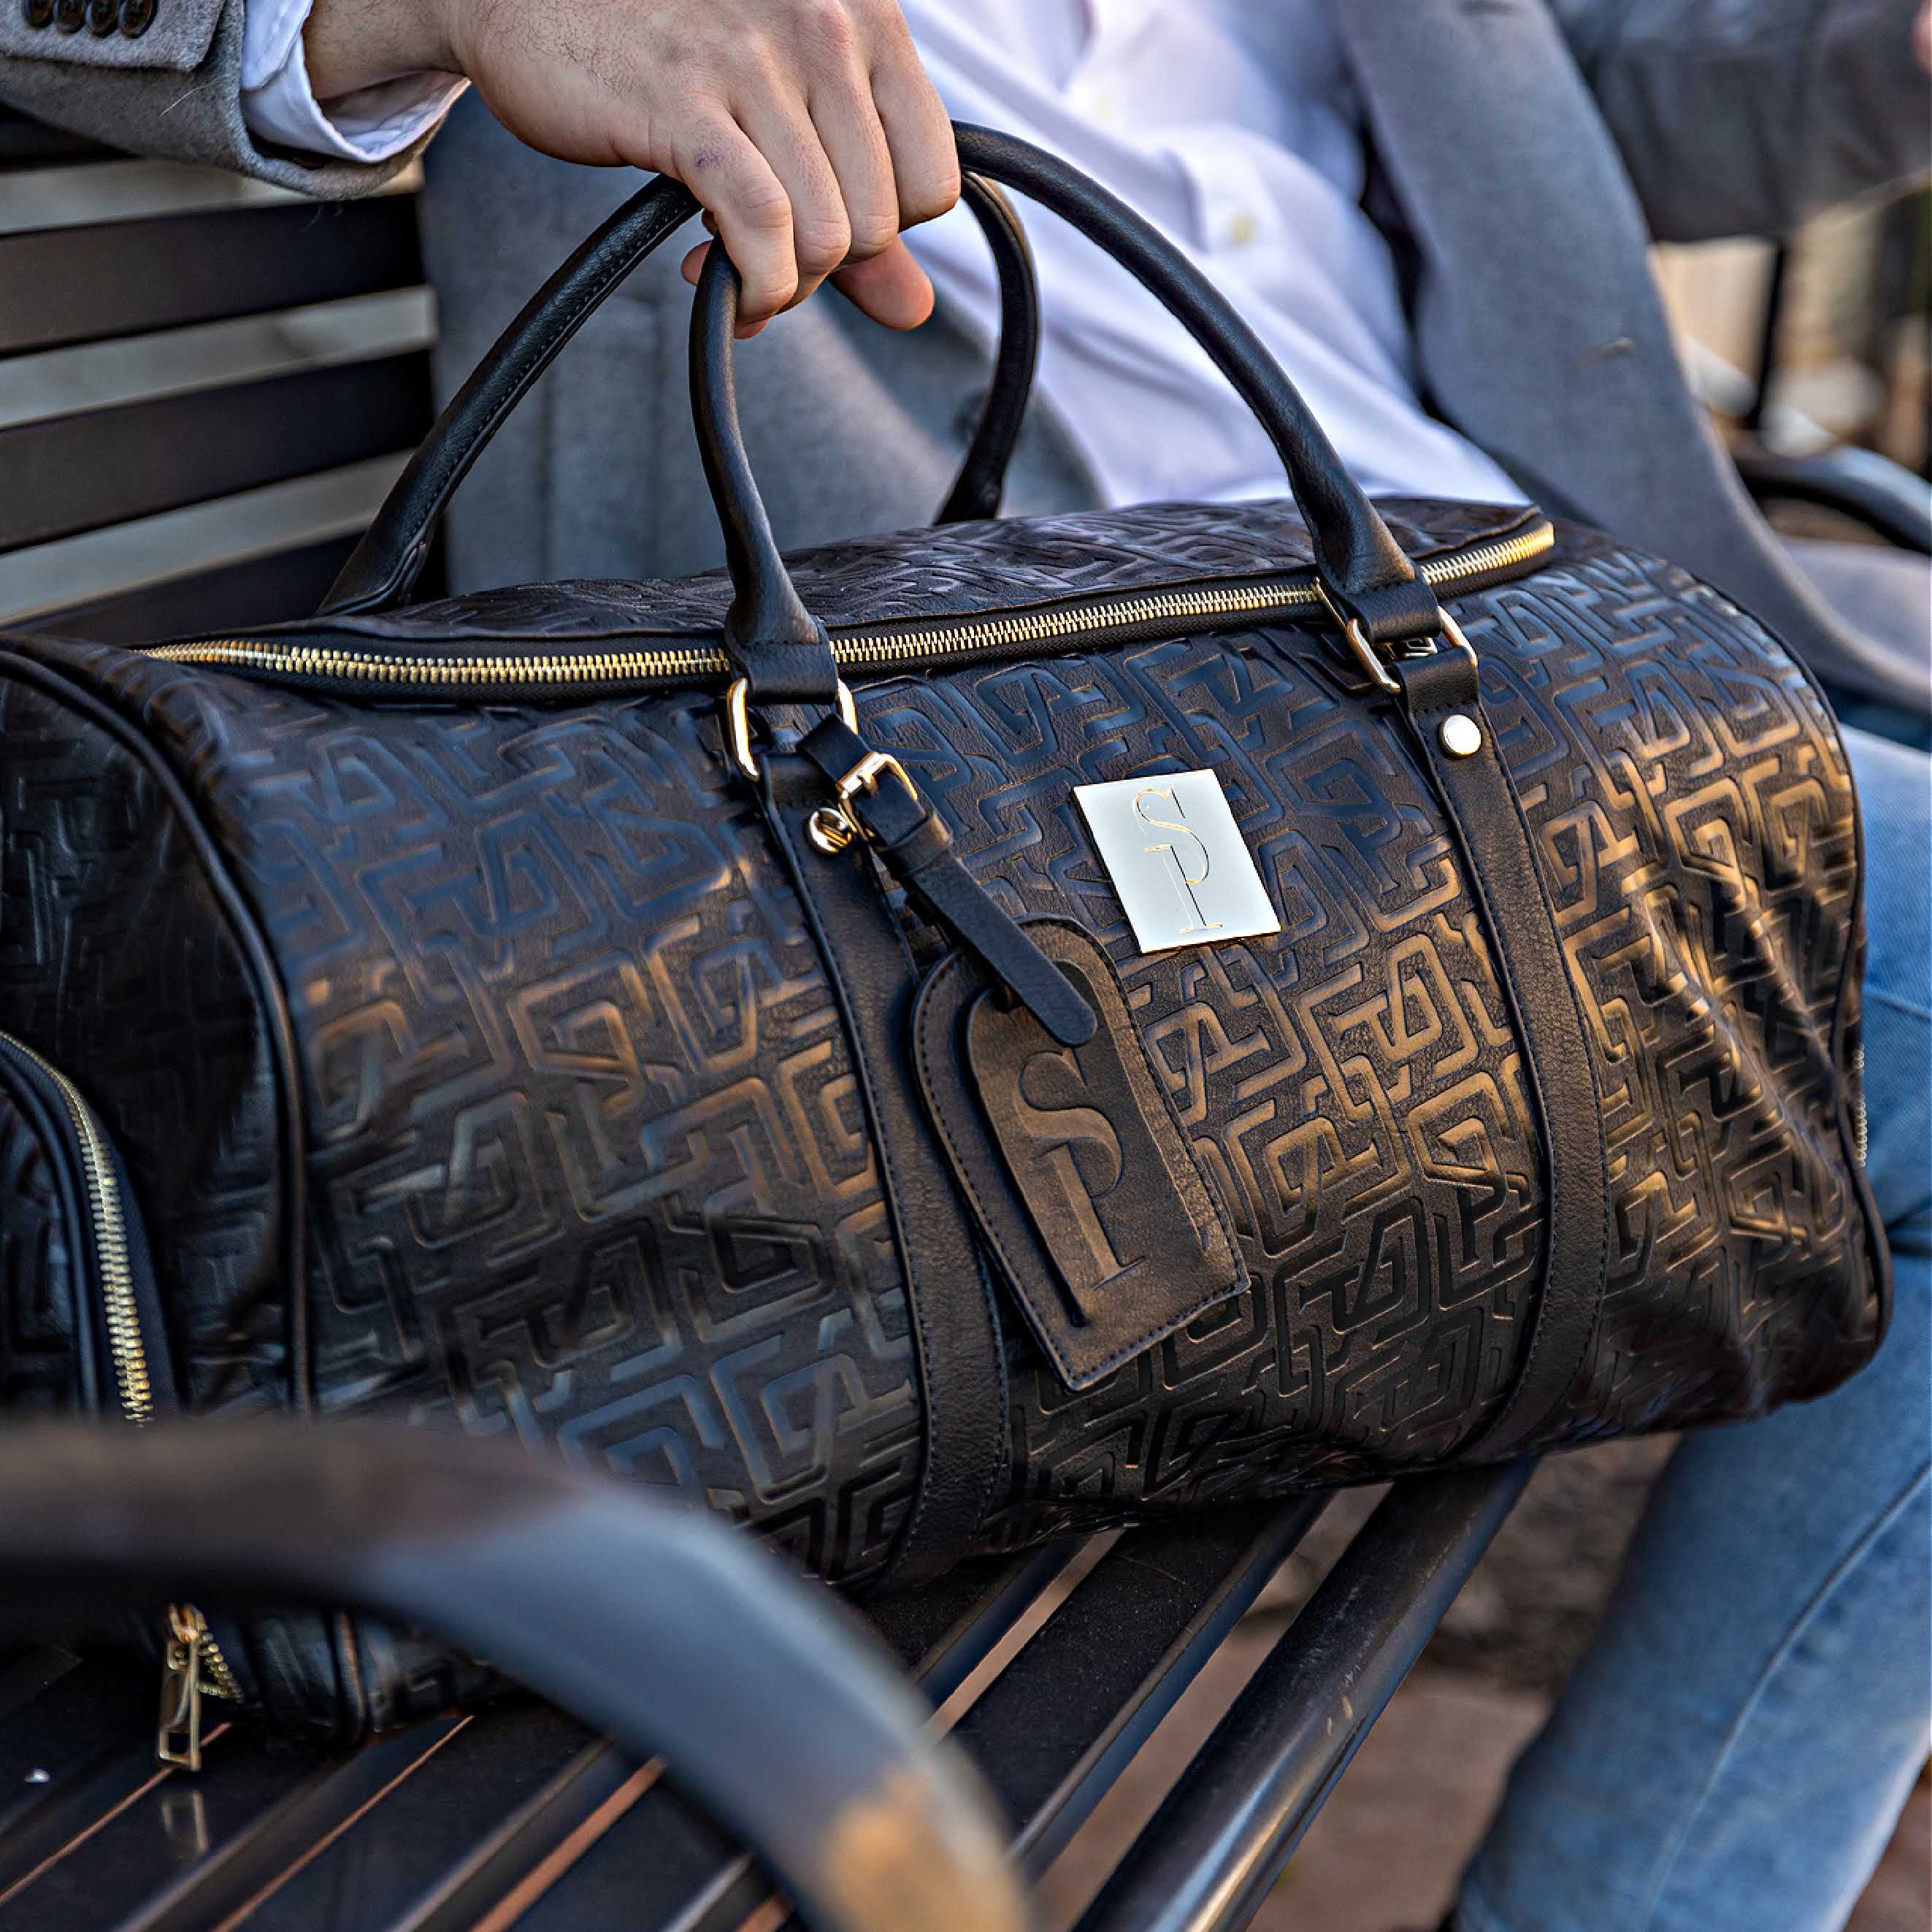 Black Monogram Leather Duffle Bag (Luxury Line)